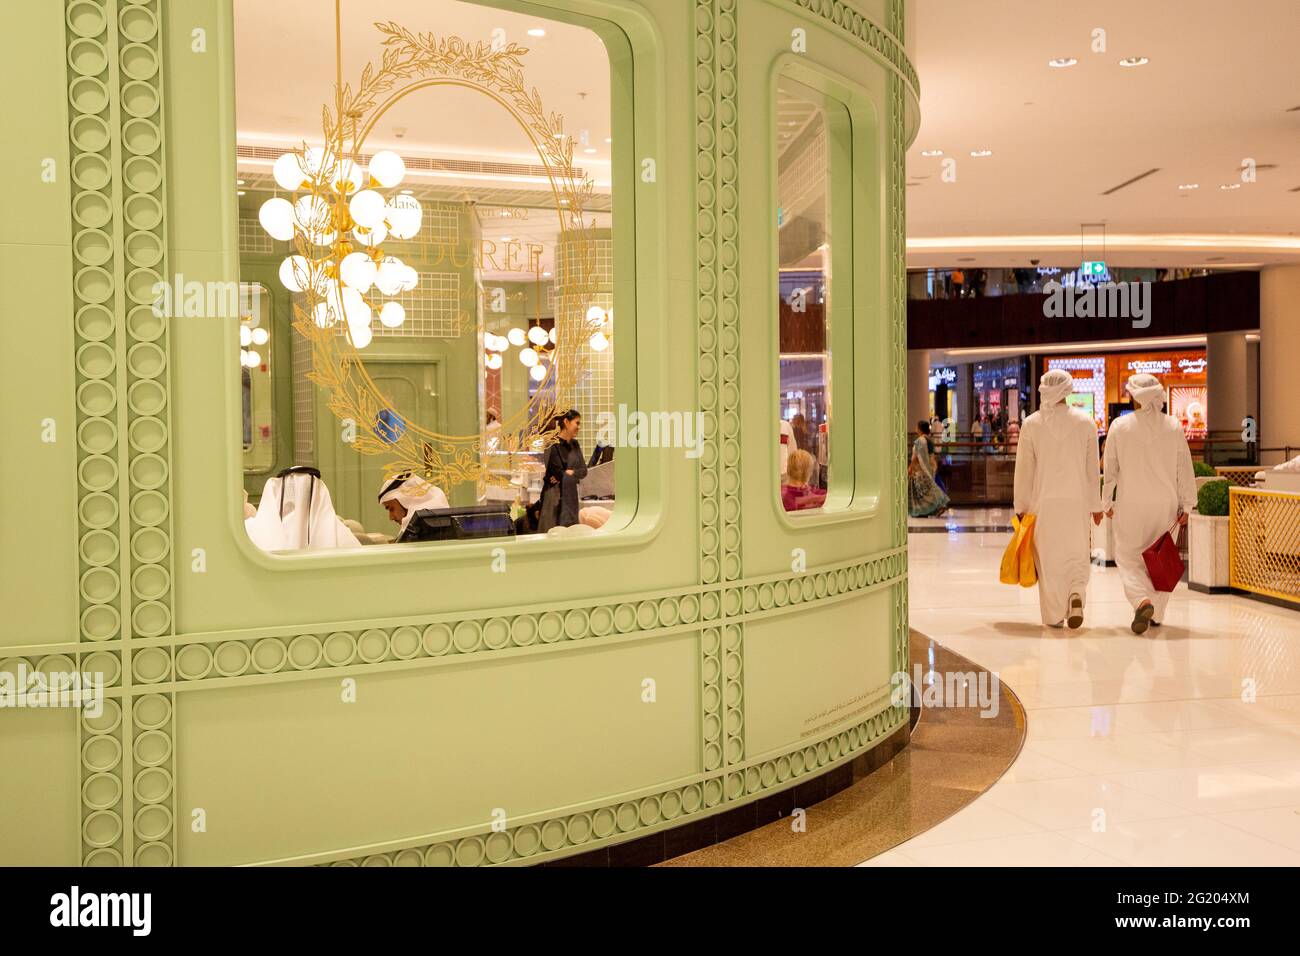 Macaron specialist Ladurée at Dubai Mall, Dubai, UAE 30.11.2018 Stock Photo